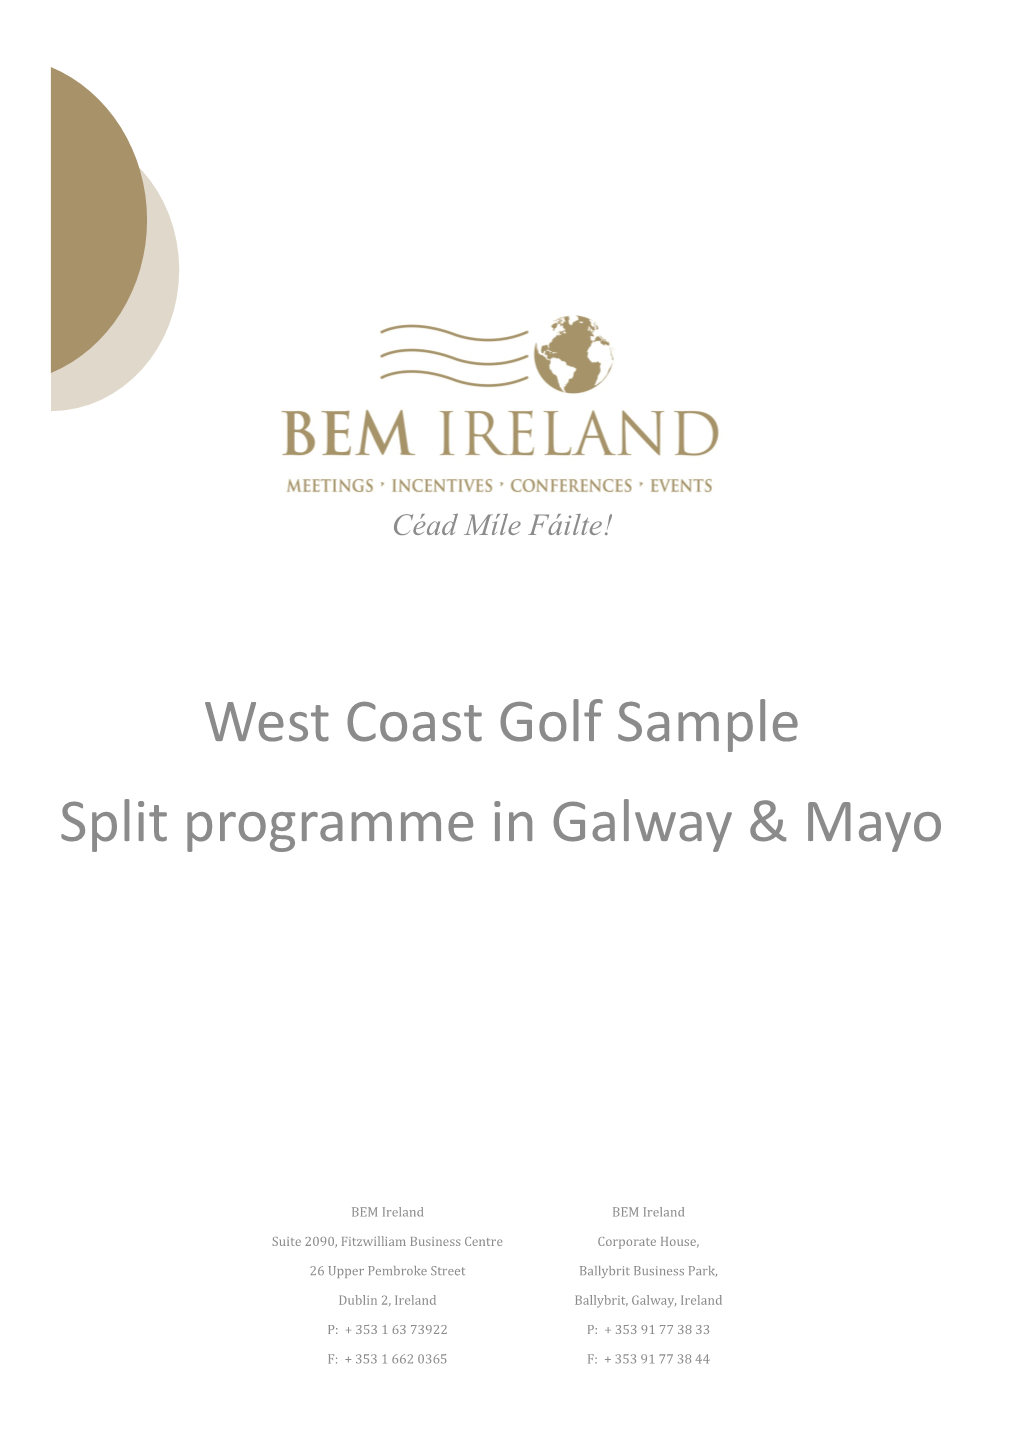 West Coast Golf Sample Split Programme in Galway & Mayo